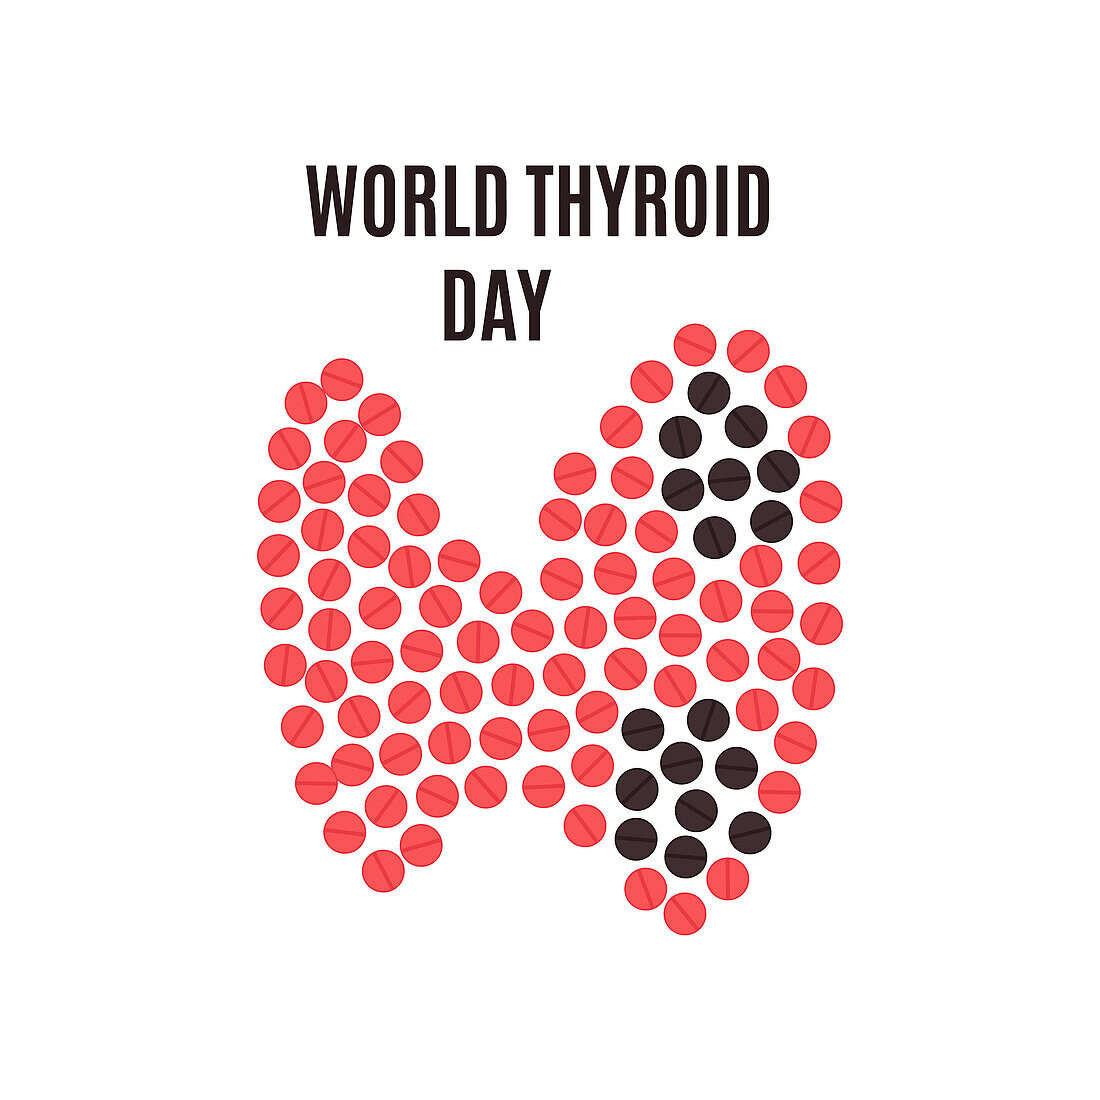 Thyroid disease awareness, conceptual illustration